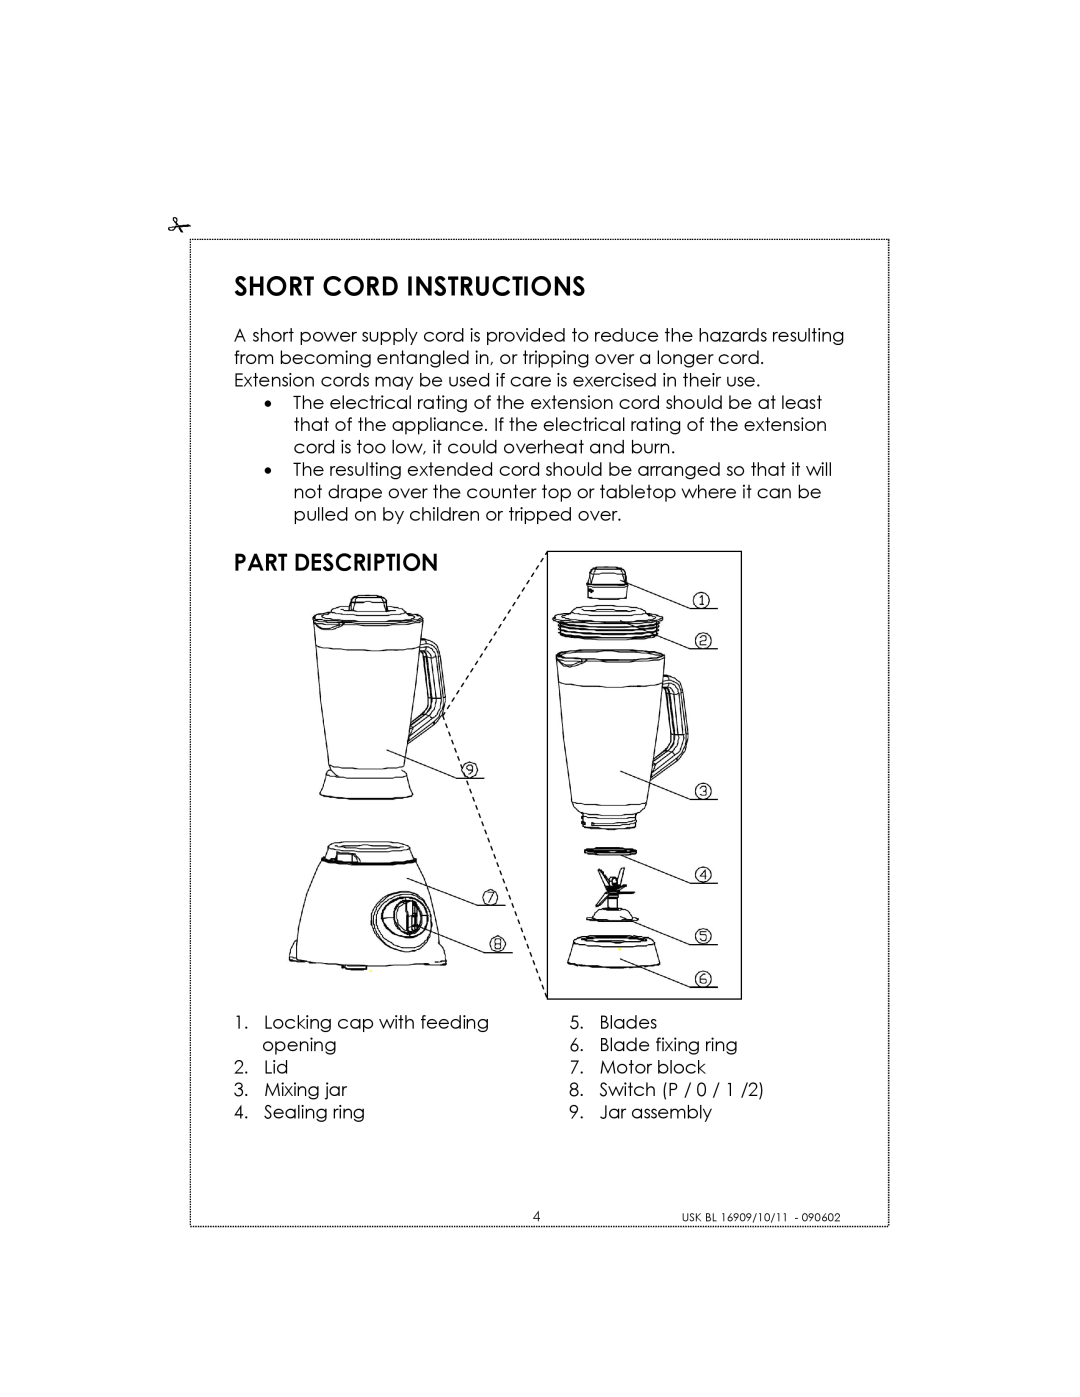 Kalorik USK BL 16910 manual Short Cord Instructions, Part Description 